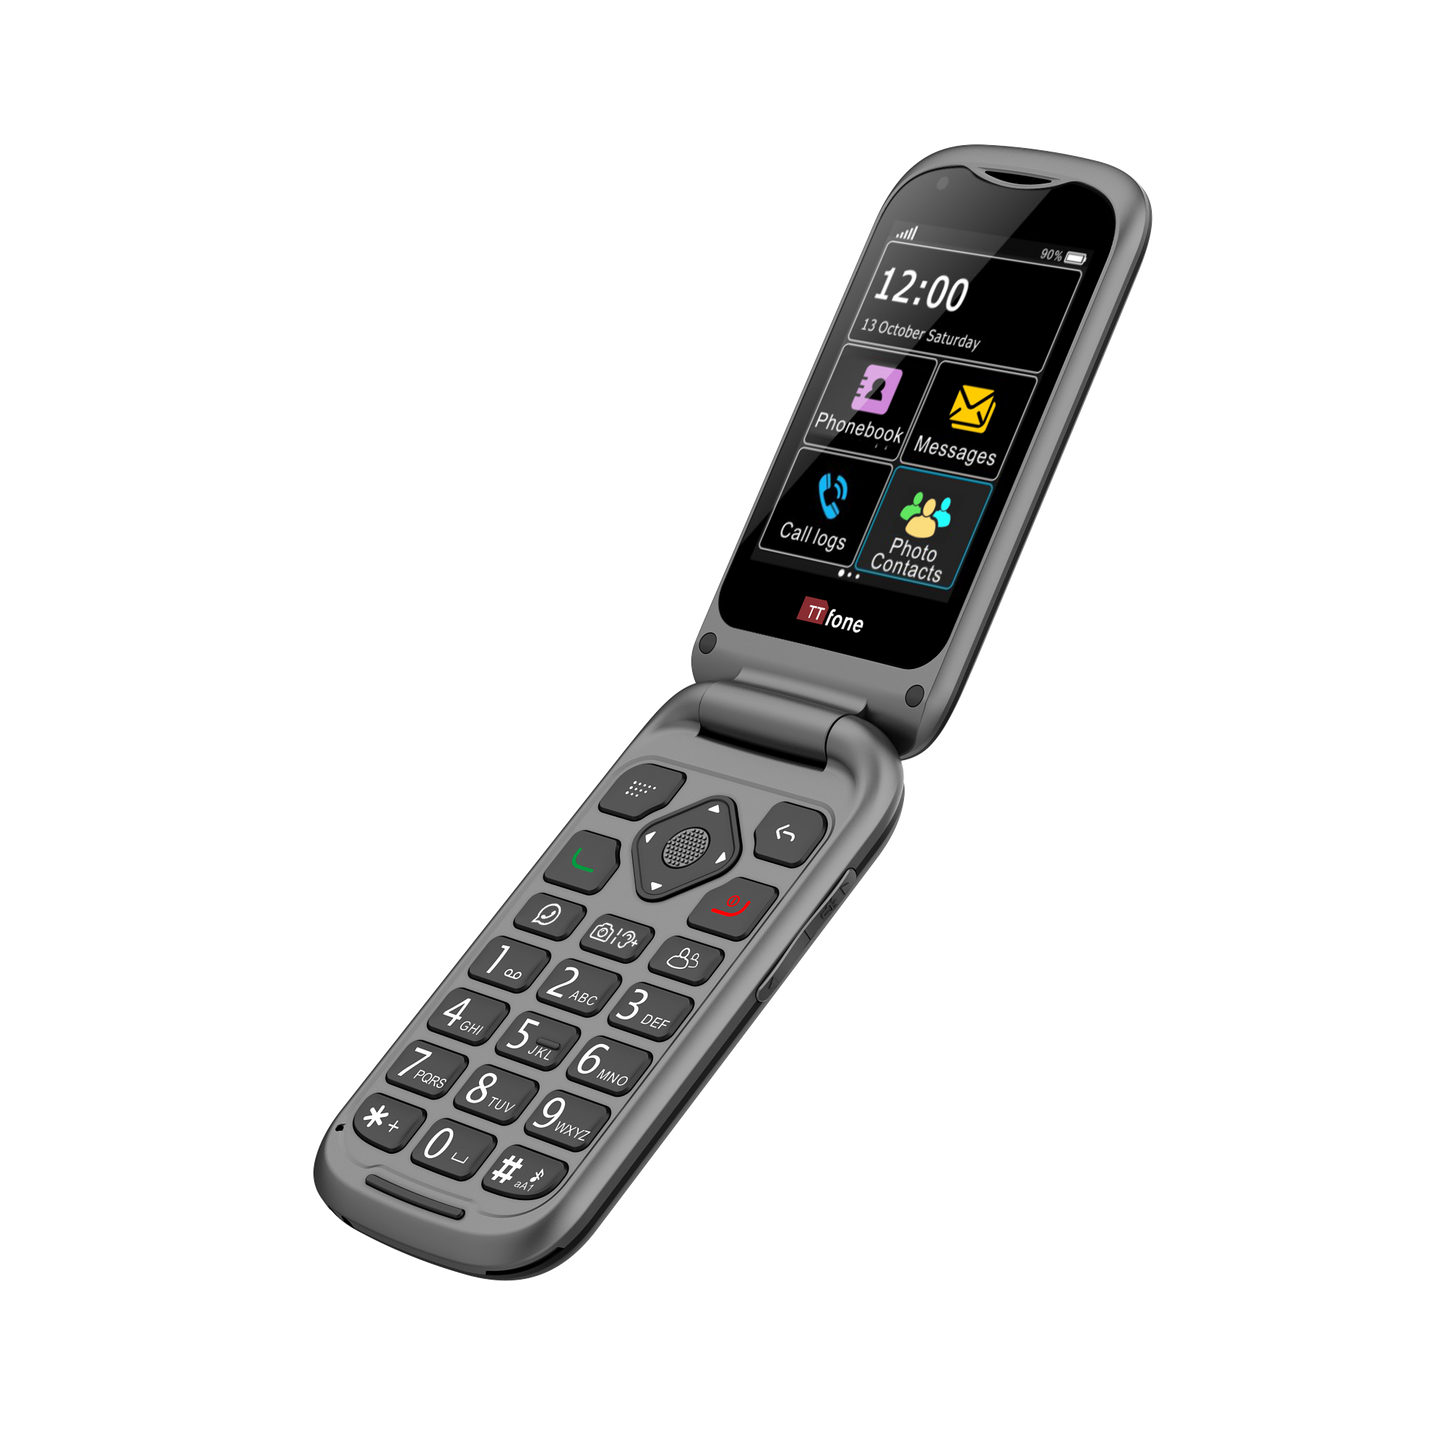 TTfone TT970 4G WhatsApp Flip Senior Big Button Mobile with Smarty Pay As You Go SIM